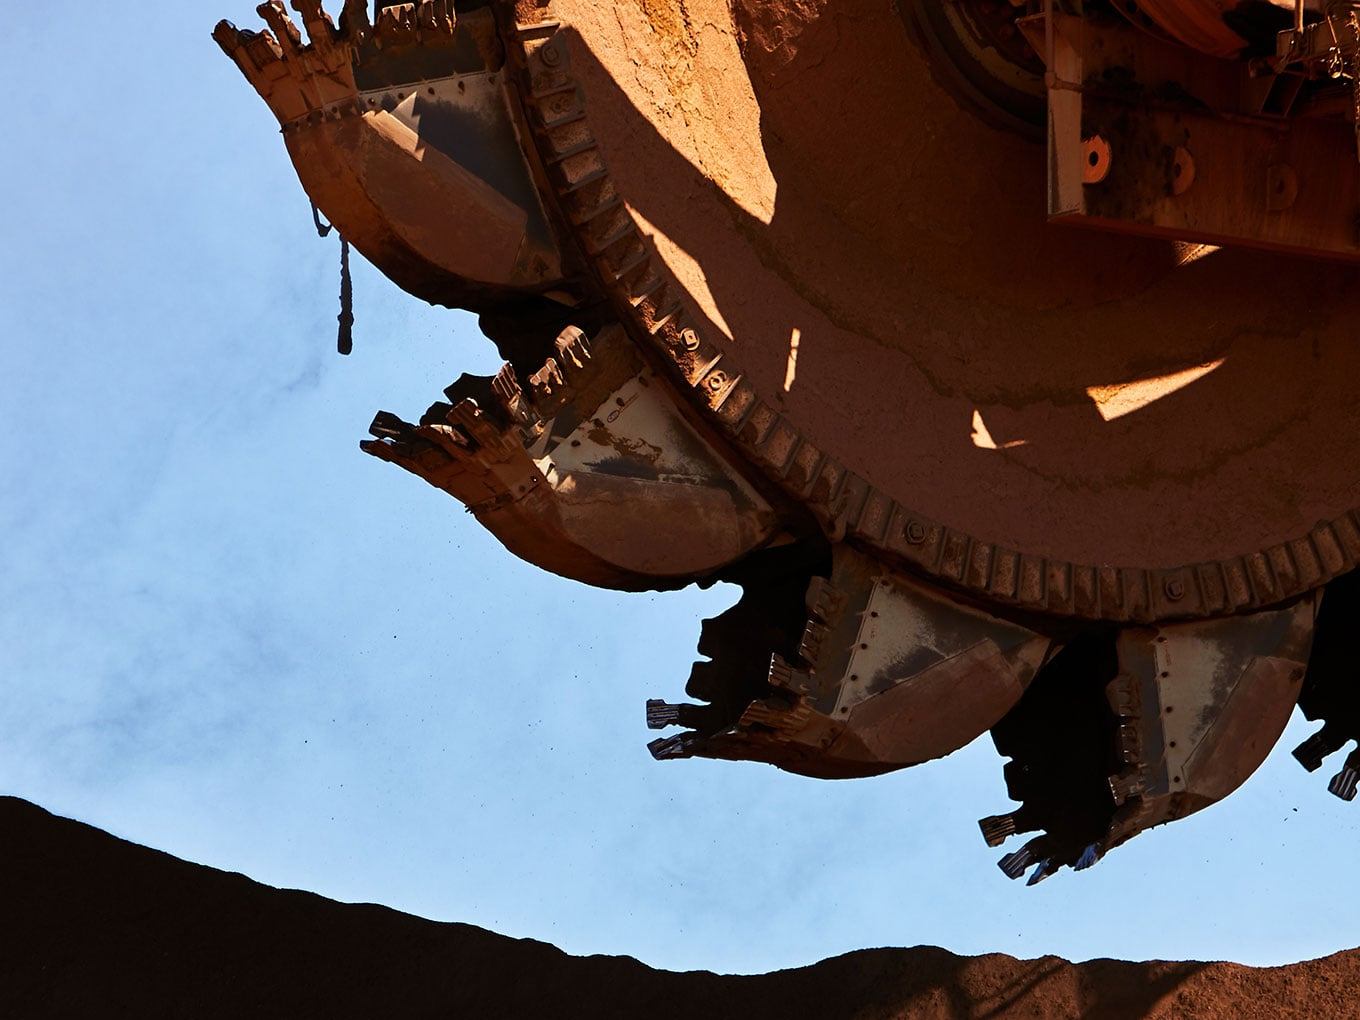 Automation plays significant role in Rio Tinto Koodaideri iron ore mine in Western Australia